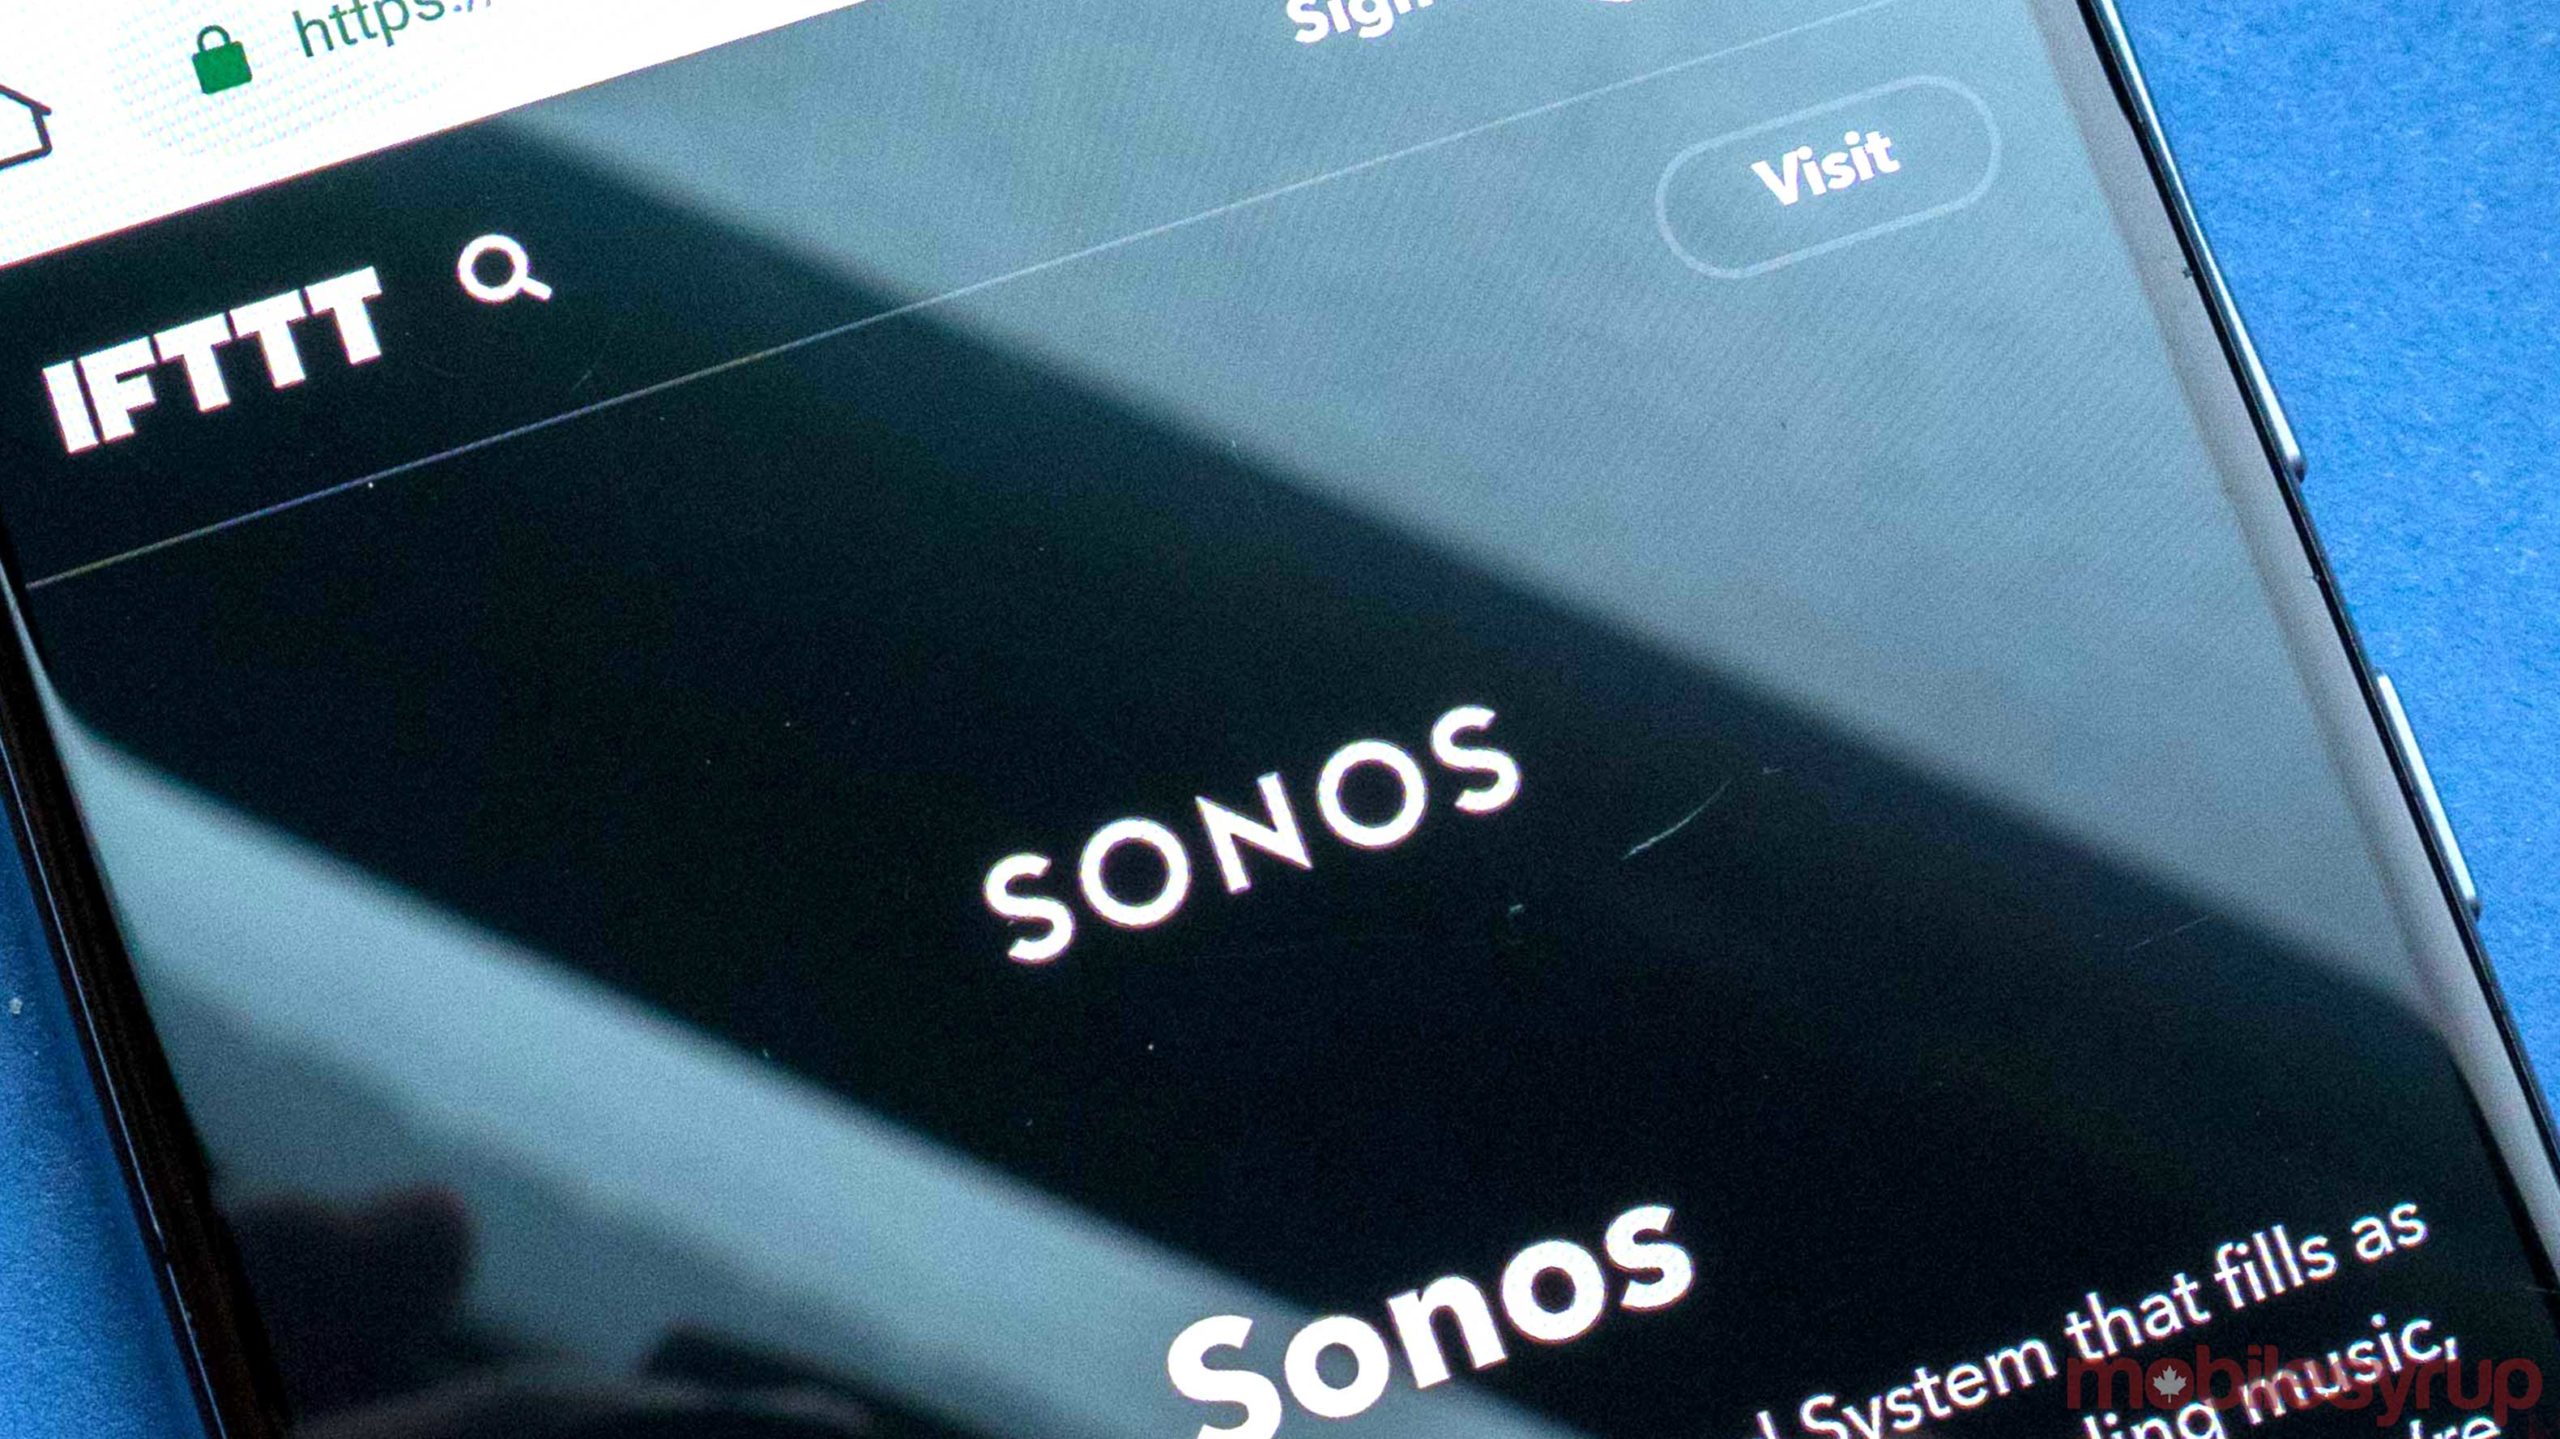 Sonos Header Revmped Scaled